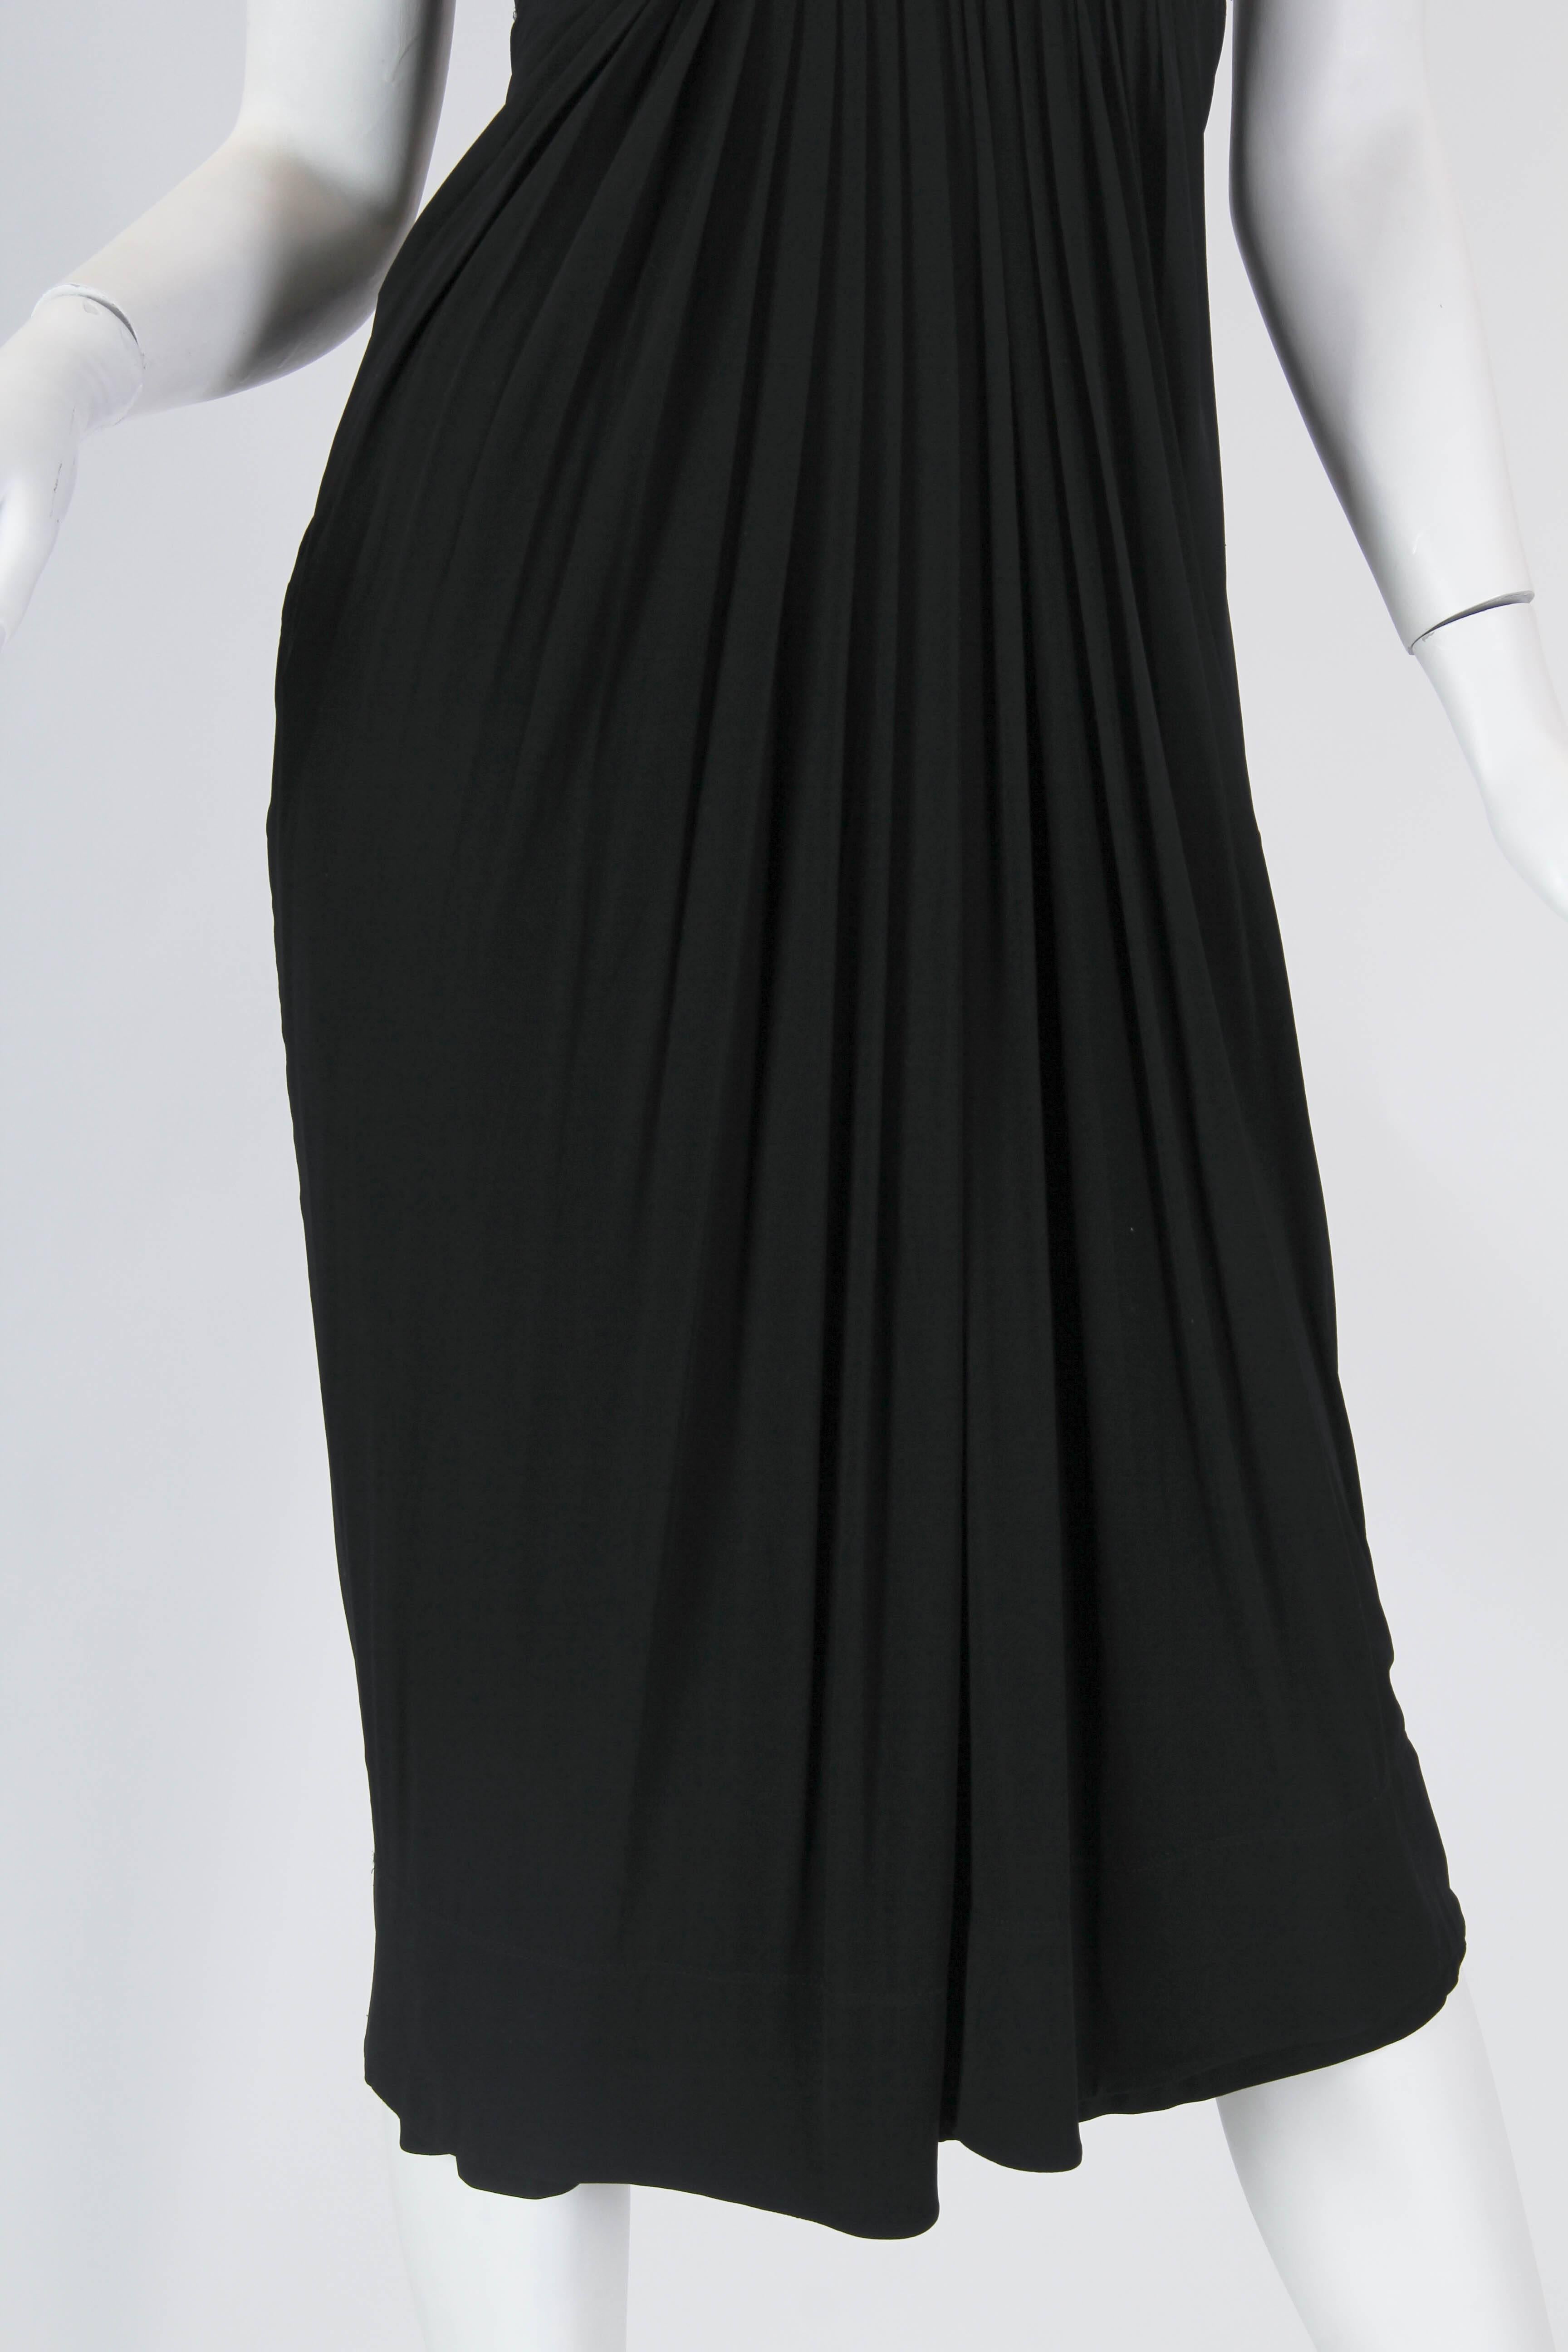 Donna Karan Draped Jersey Dress 3